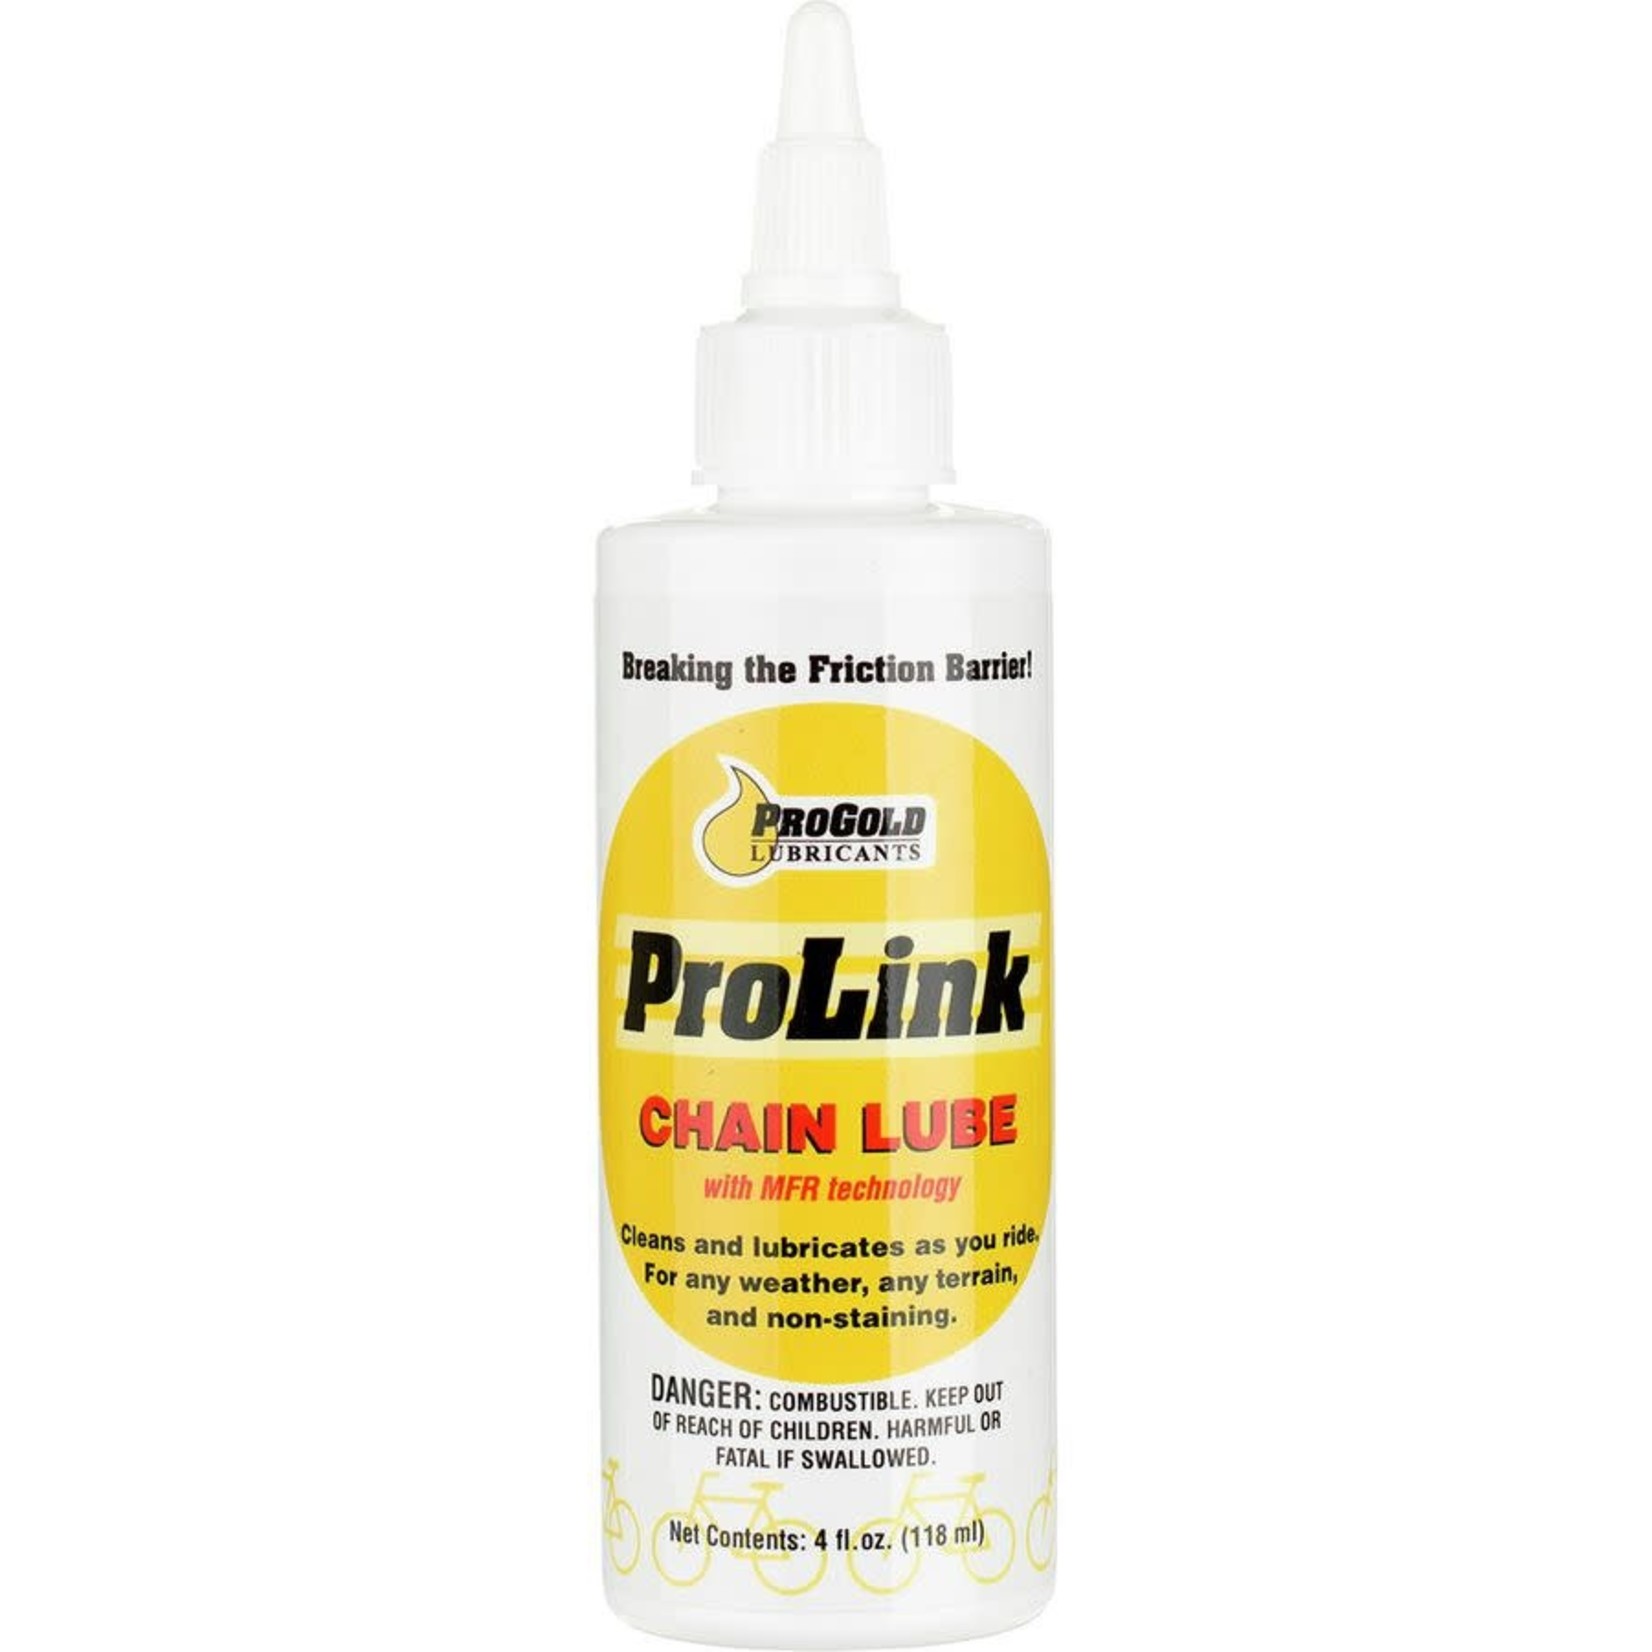 Prolink Prolink Chain Lube 118ml